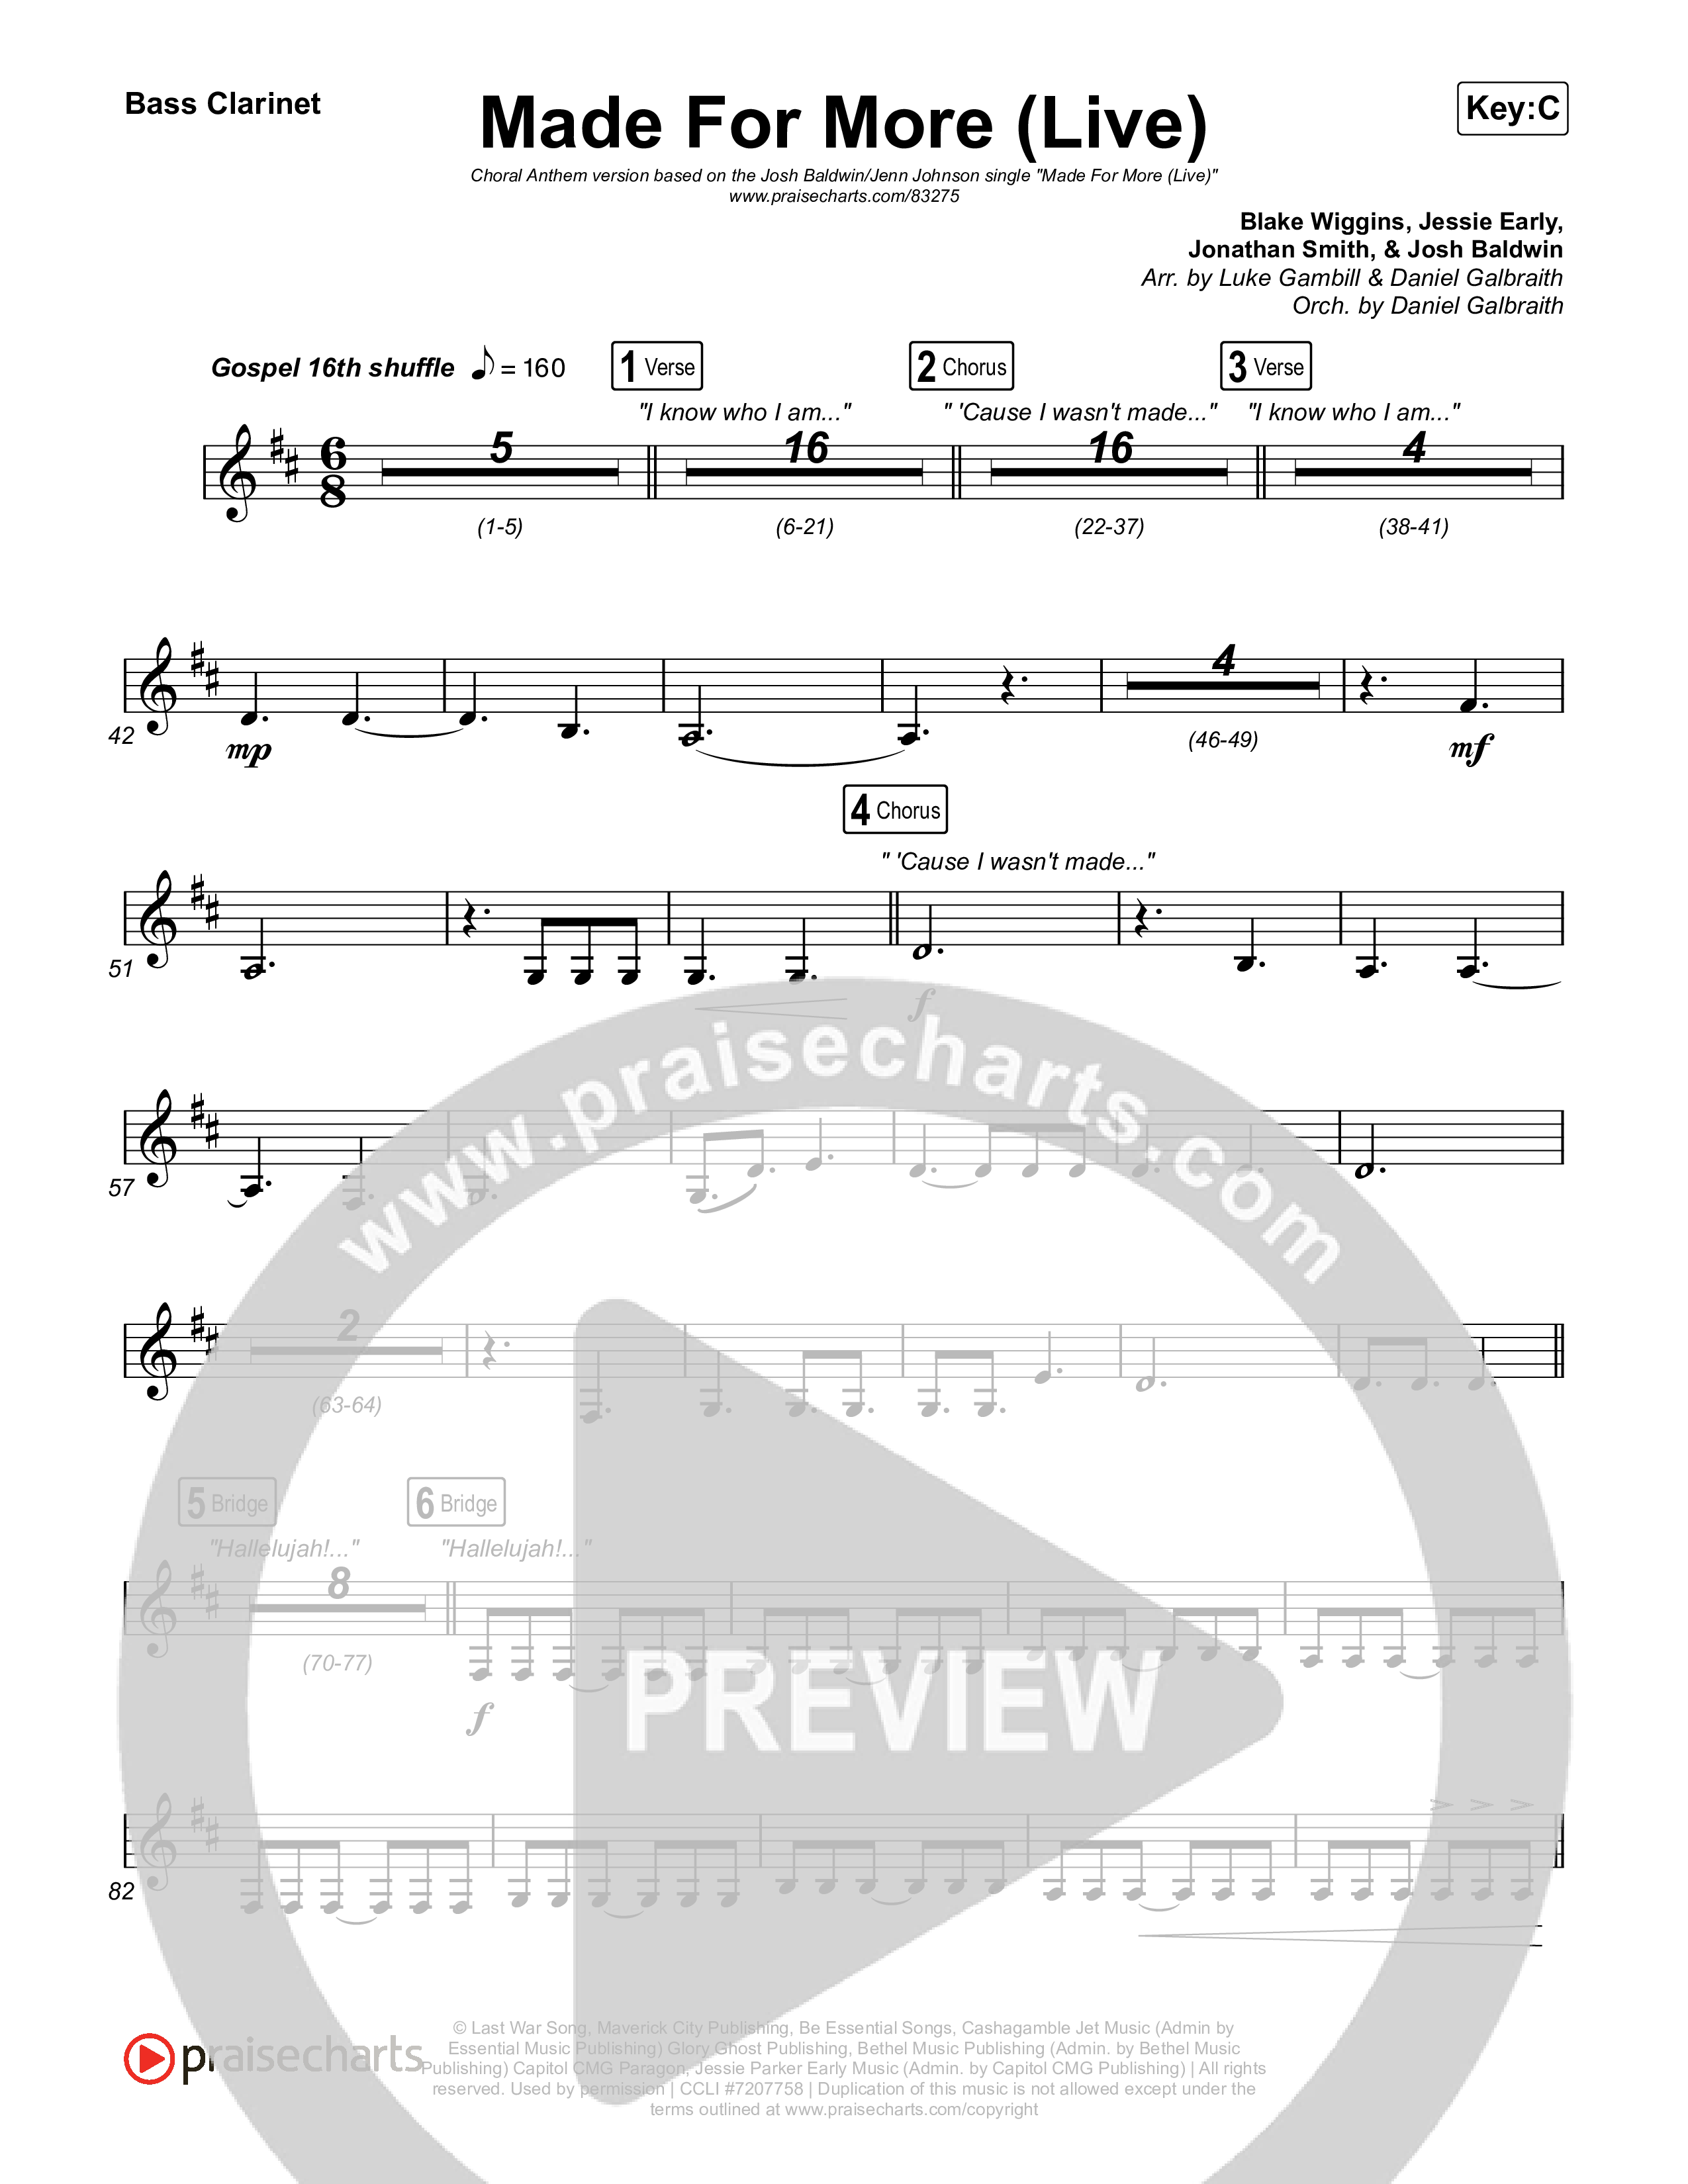 Made For More (Choral Anthem SATB) Clarinet 1,2 (Josh Baldwin / Jenn Johnson / Arr. Luke Gambill)